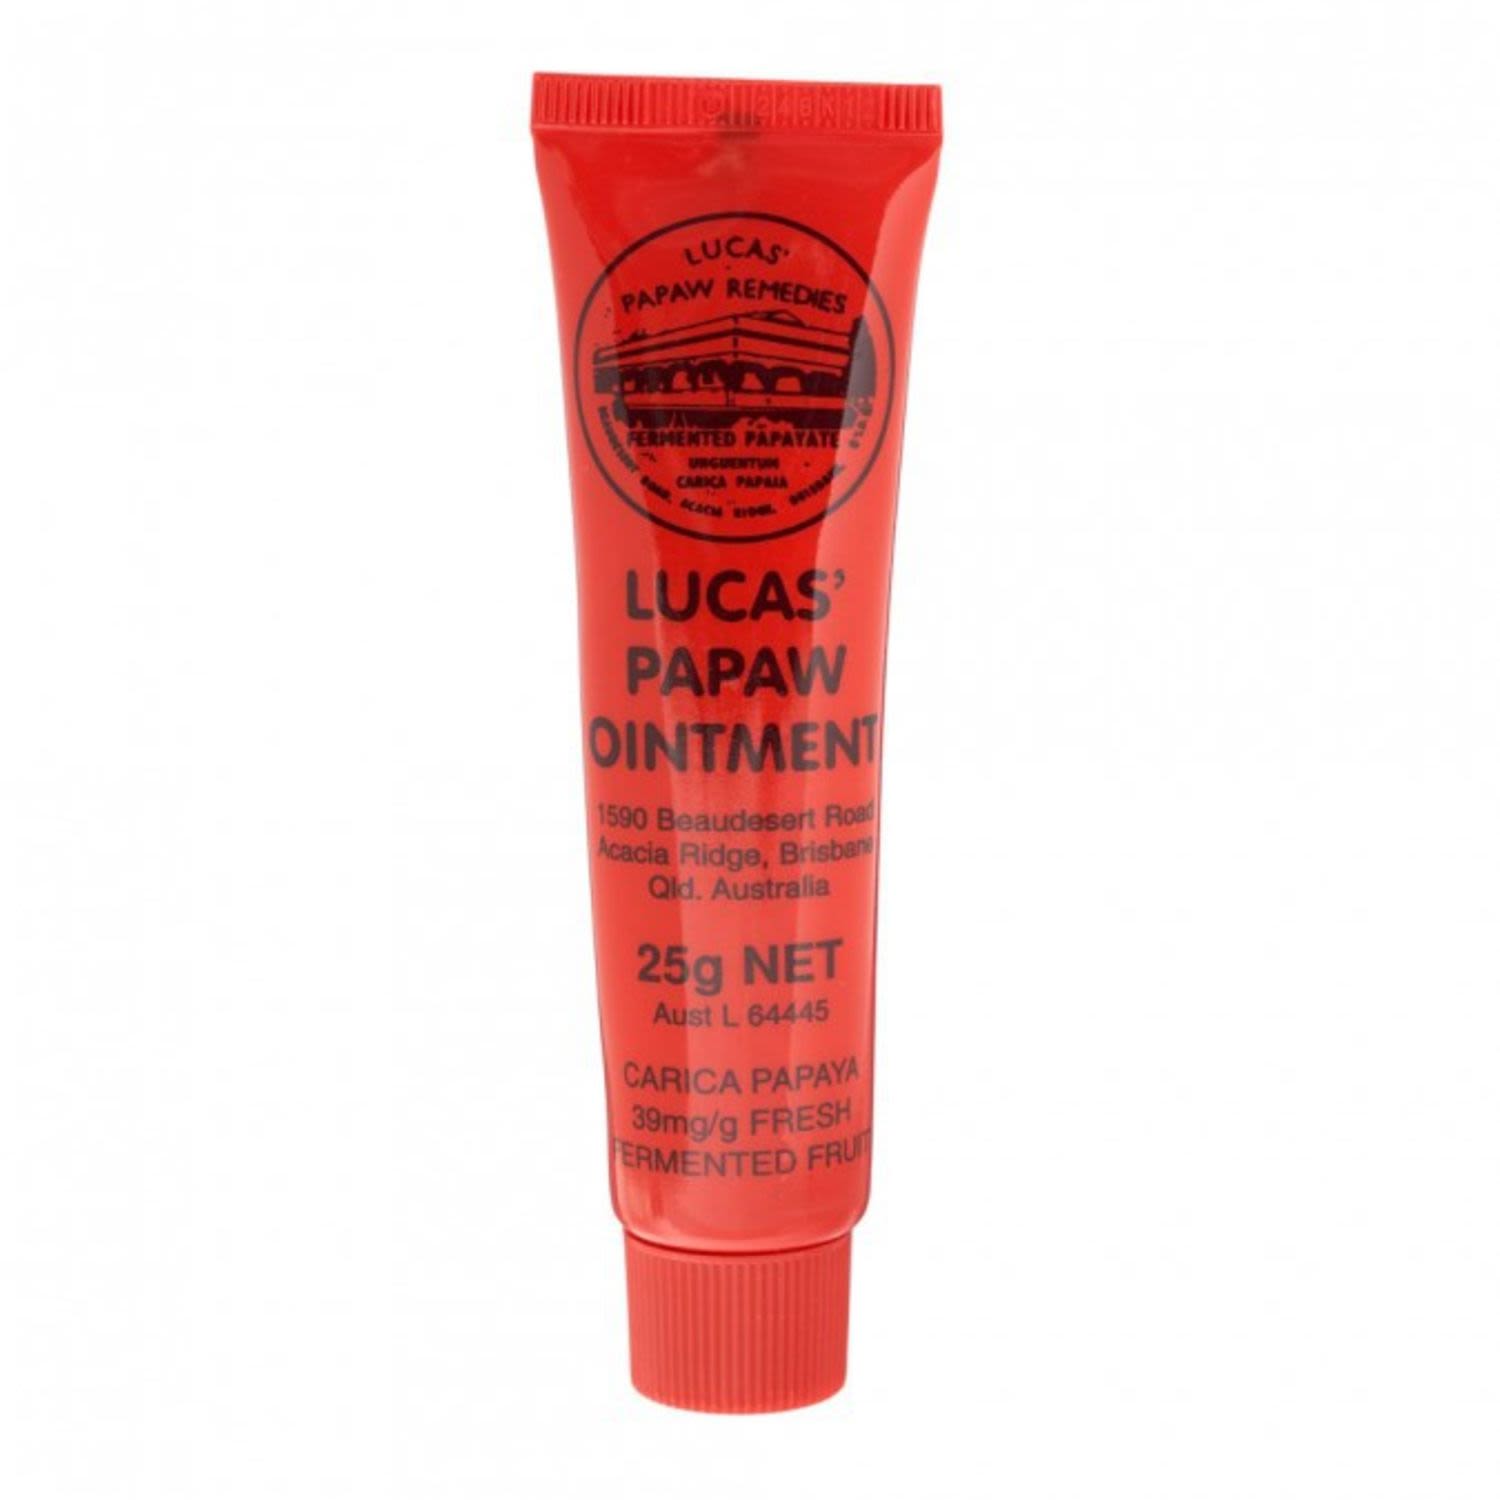 Lucas' Papaw Lip Care Ointment, 25 Gram